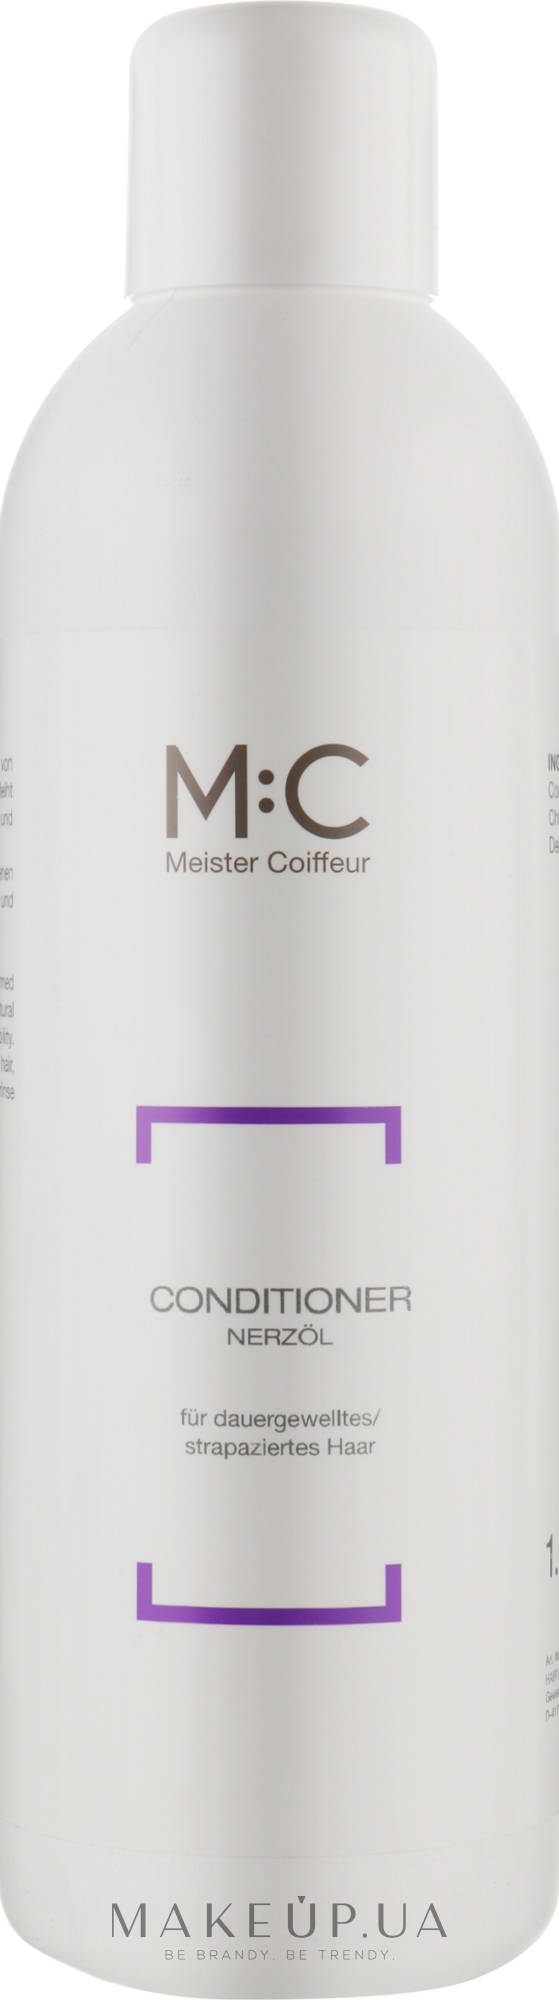 Кондиционер-ополаскиватель с норковым маслом - M:C Meister Coiffeur Conditioner Nerzol  — фото 1000ml